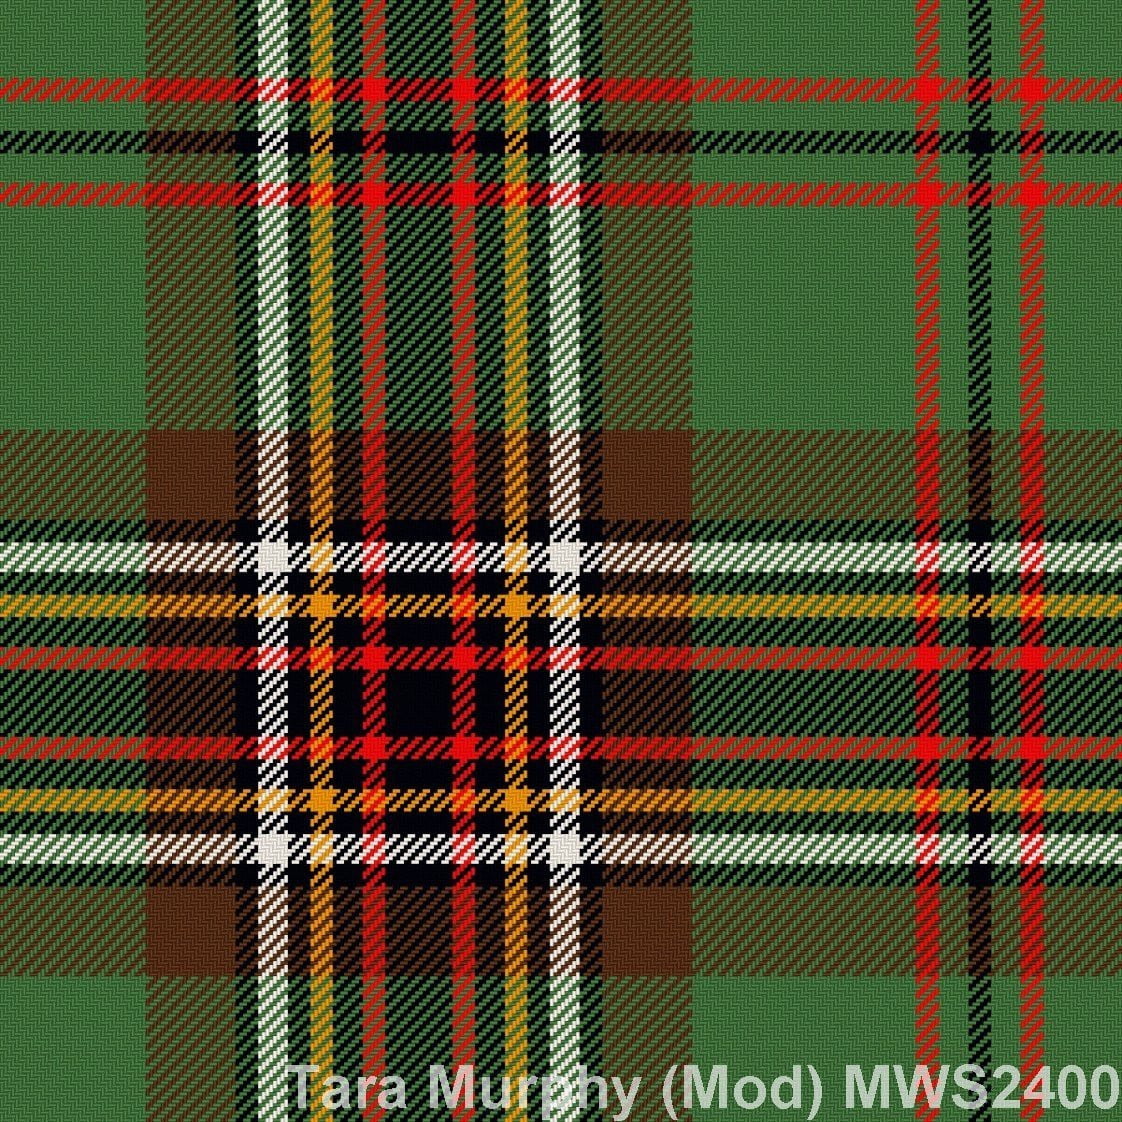 Tara Murphy Modern